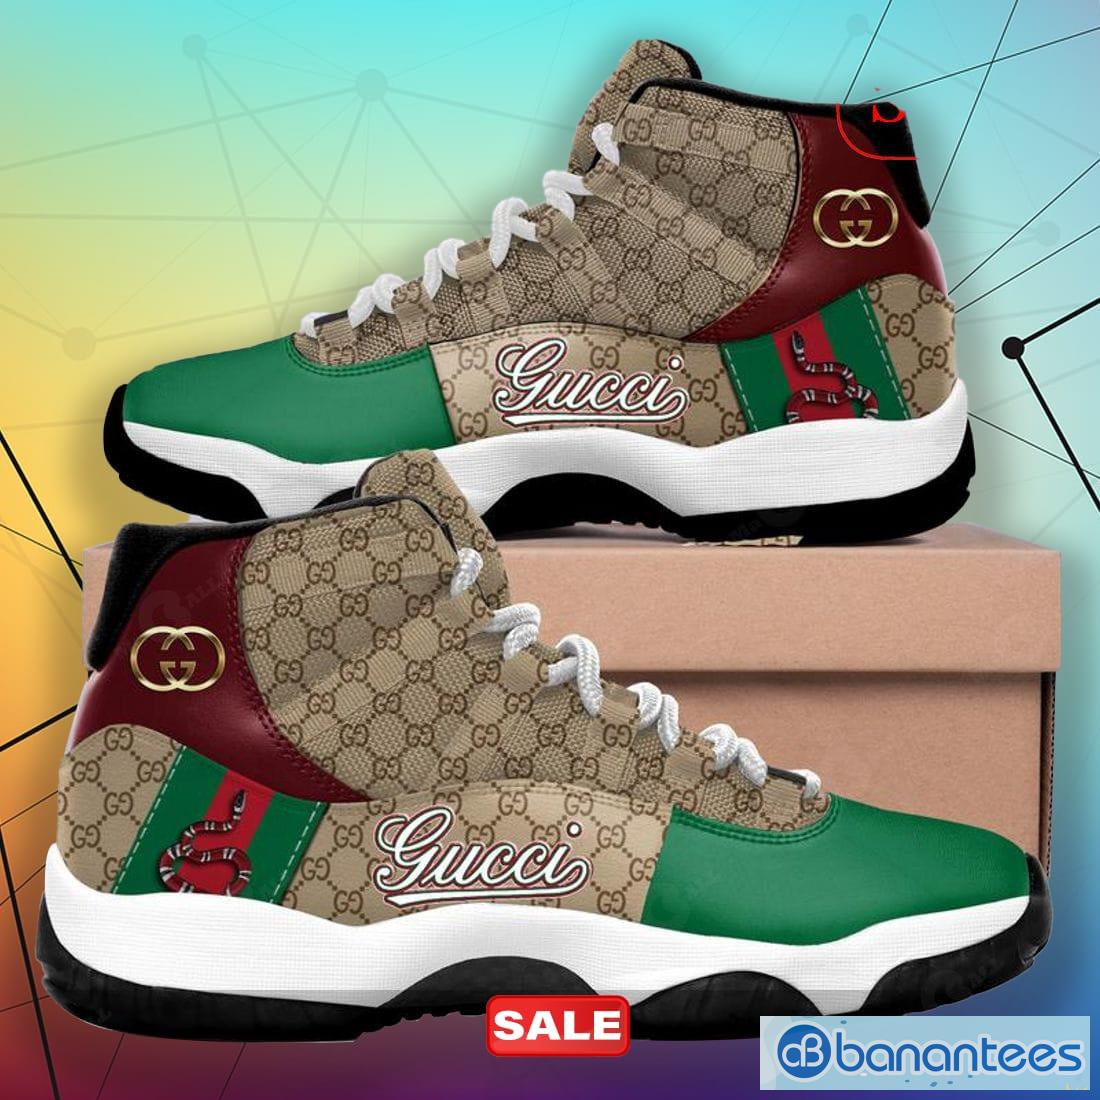 Gucci Brand Snake Air Jordan 11 Gucci Sneakers Gifts For Men Women Shoes  Design - Banantees